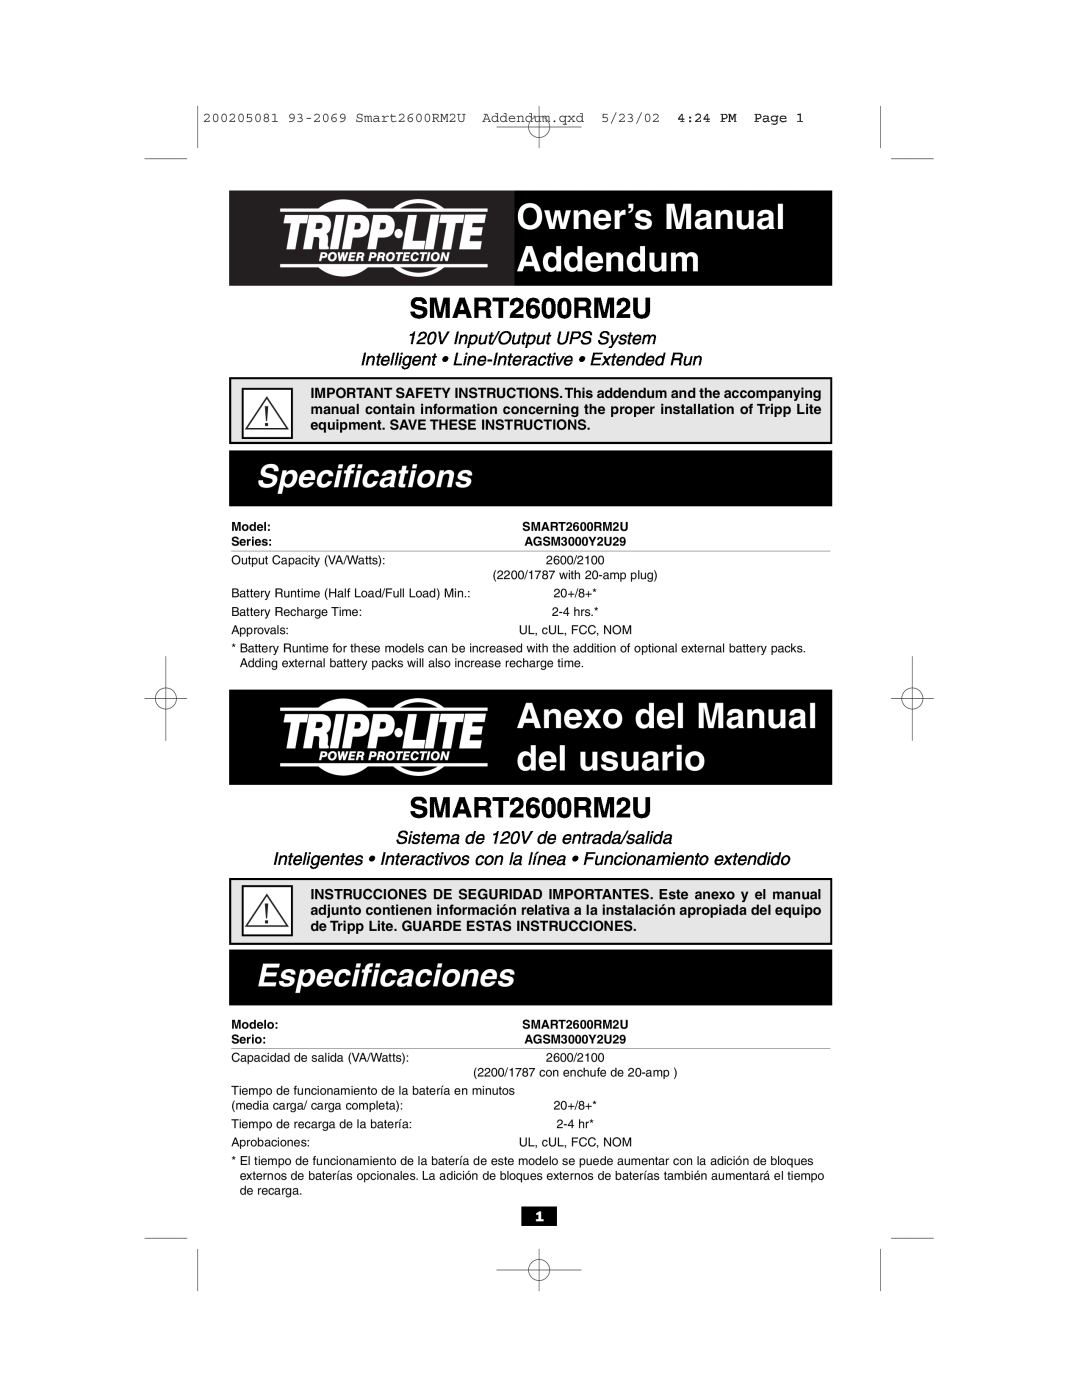 Tripp Lite 3000VA owner manual Specifications, Especificaciones, SMART2600RM2U, 120V Input/Output UPS System 